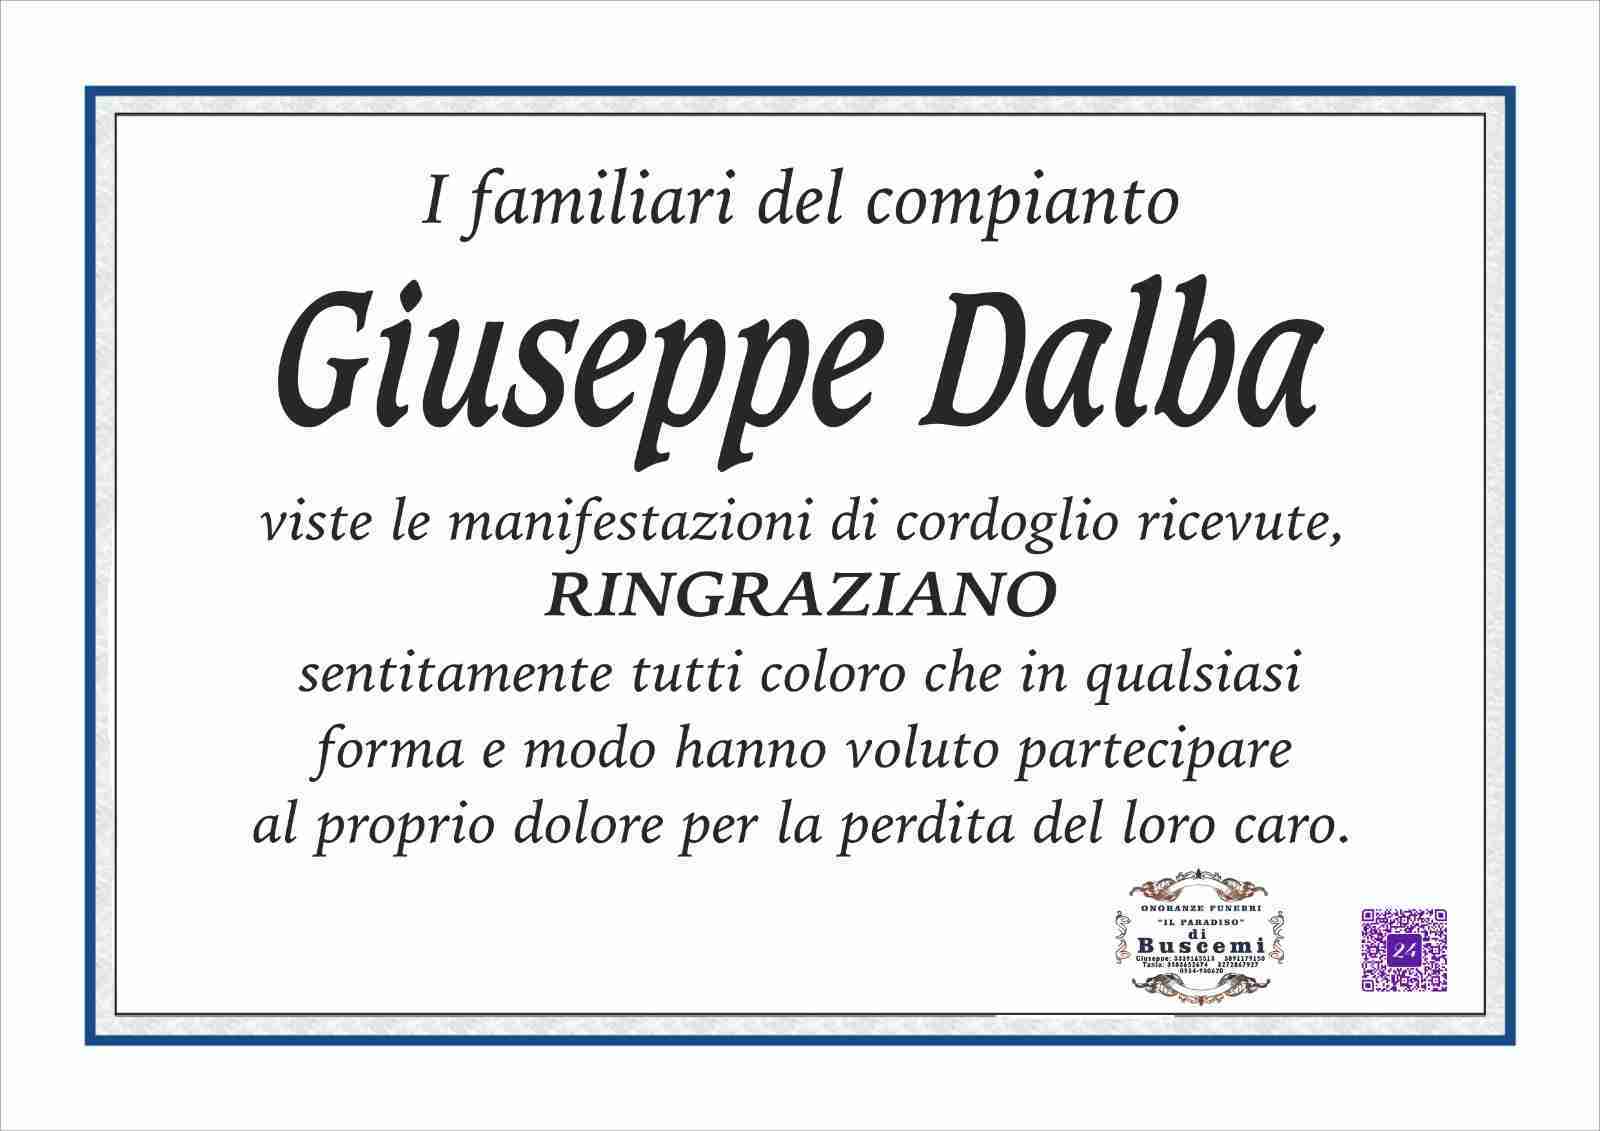 Giuseppe Dalba